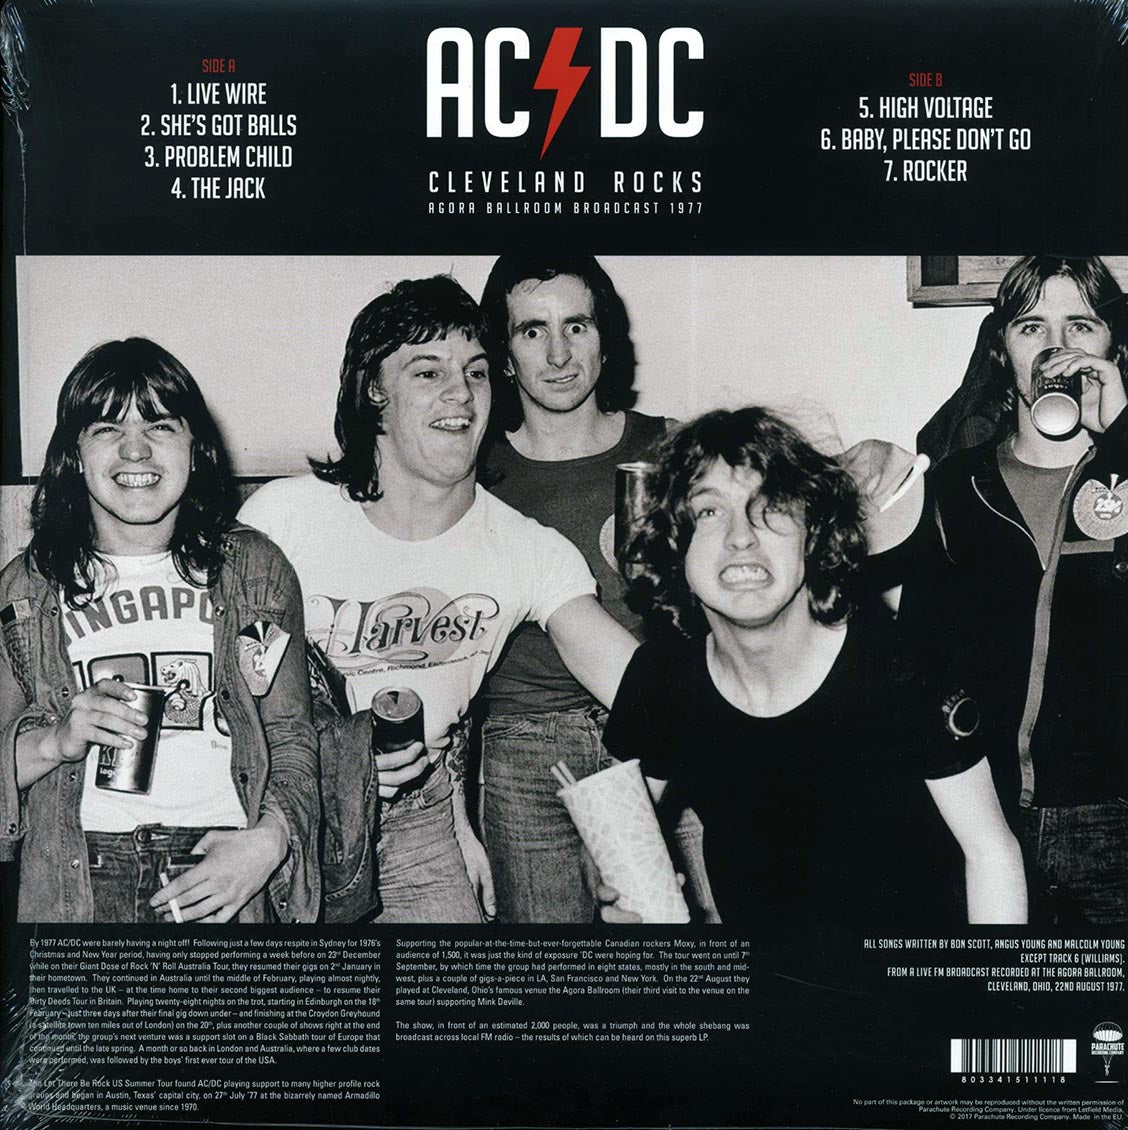 AC/DC - Cleveland Rocks: Agora Ballroom Broadcast 1977 (ltd. ed.) (deluxe edition (remastered)) - Vinyl LP, LP